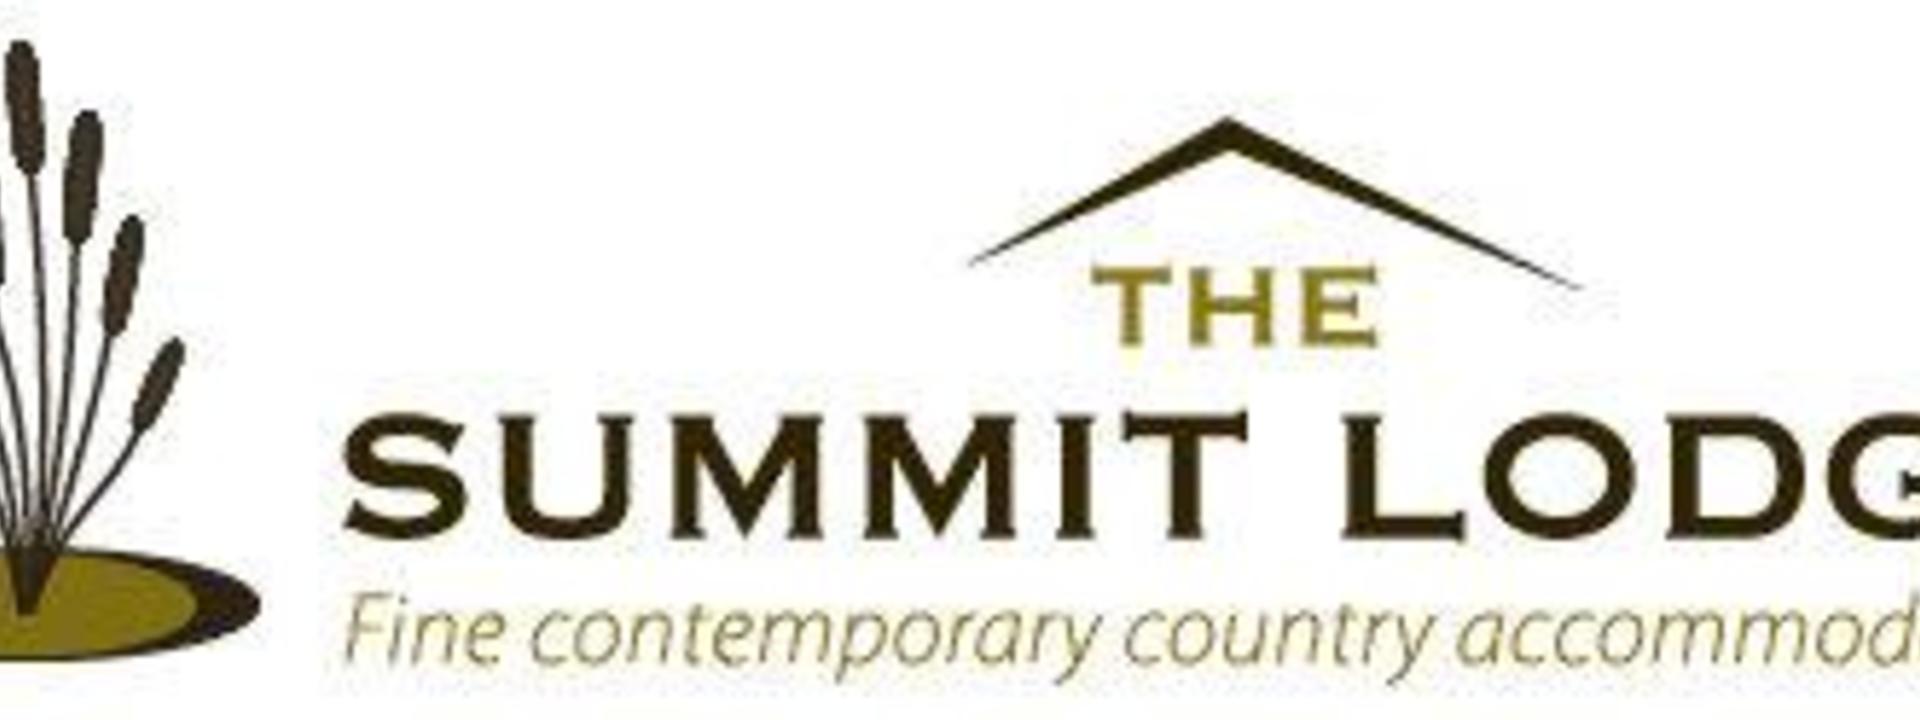 Summit Lodge Logo